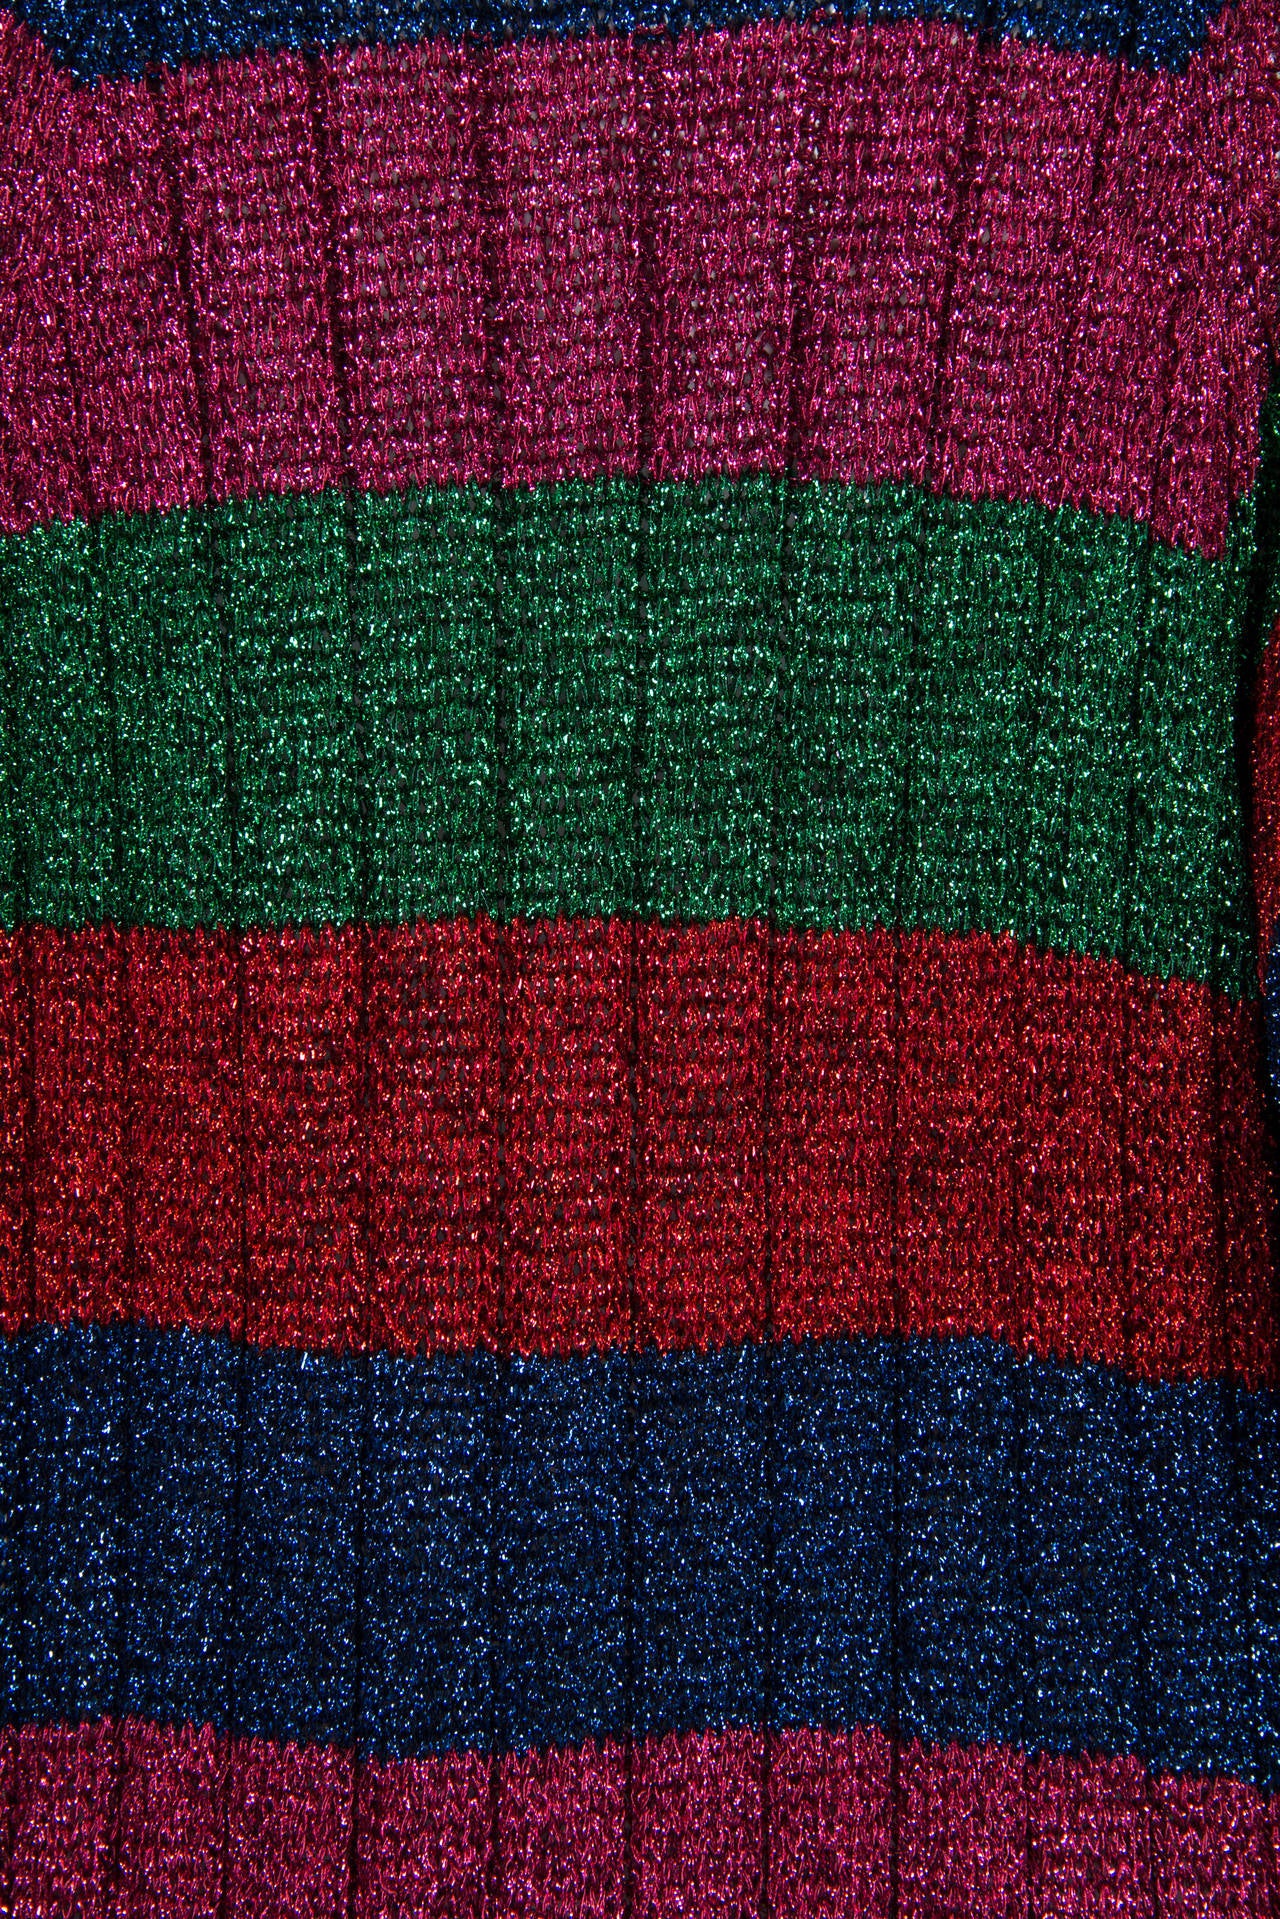 Women's 1970s Maxi Lurex Sweater from Harriet Selling for Henri Bendel